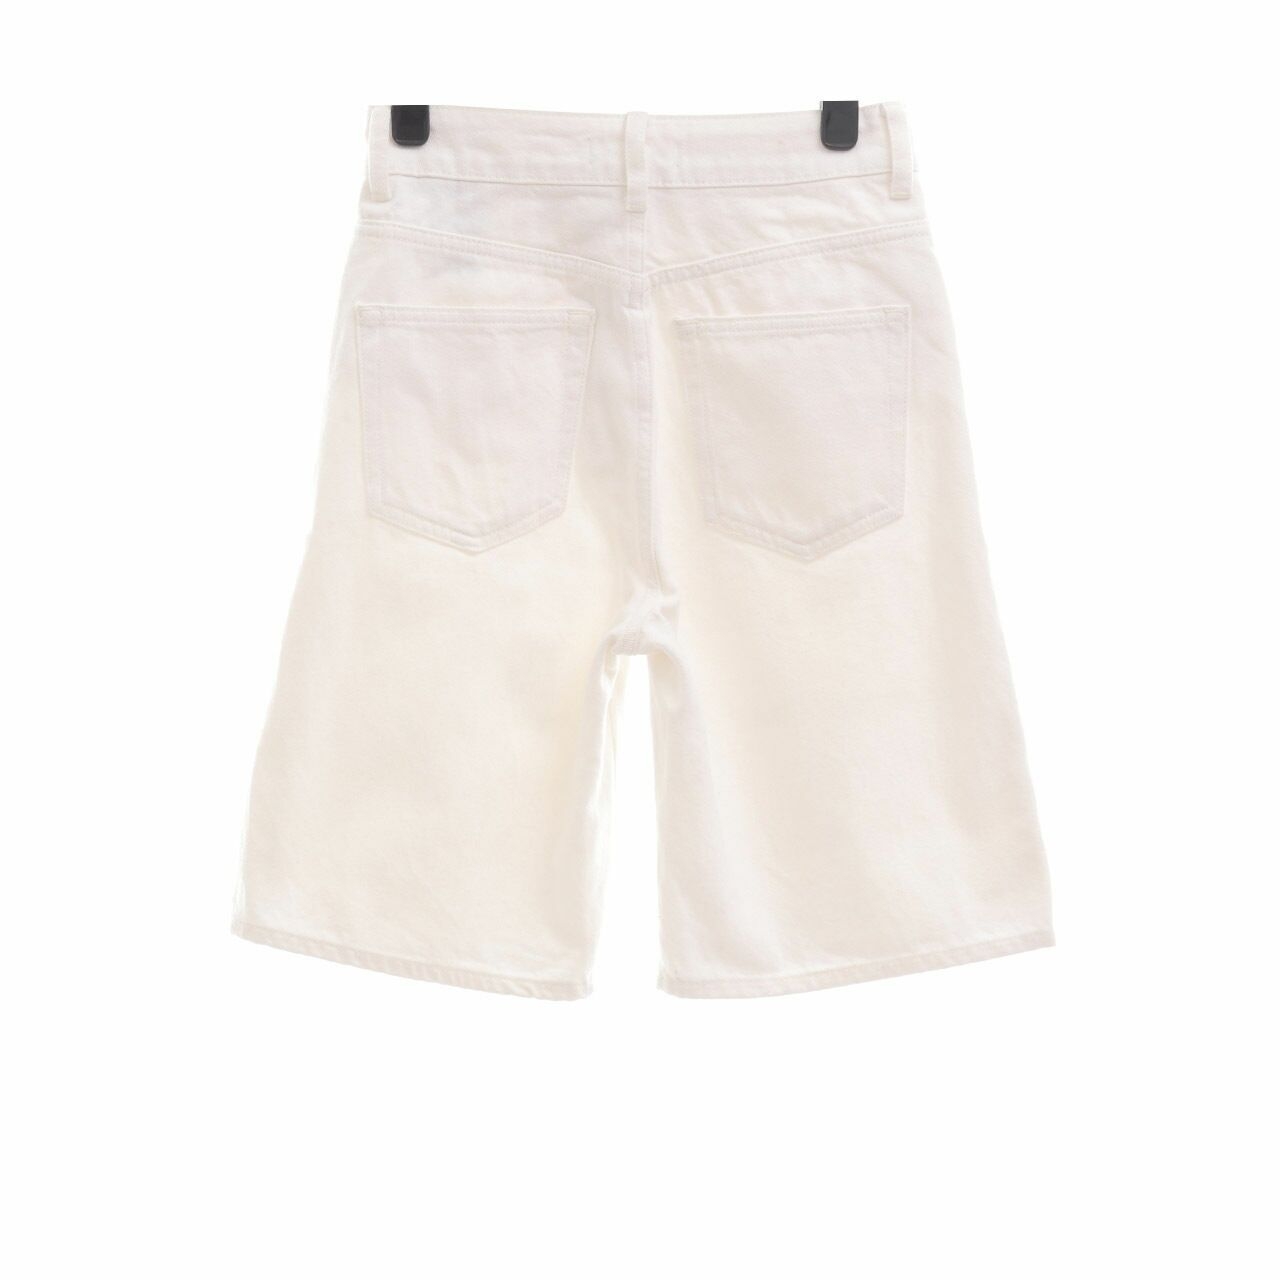 H&M Off White Denim Short Pants